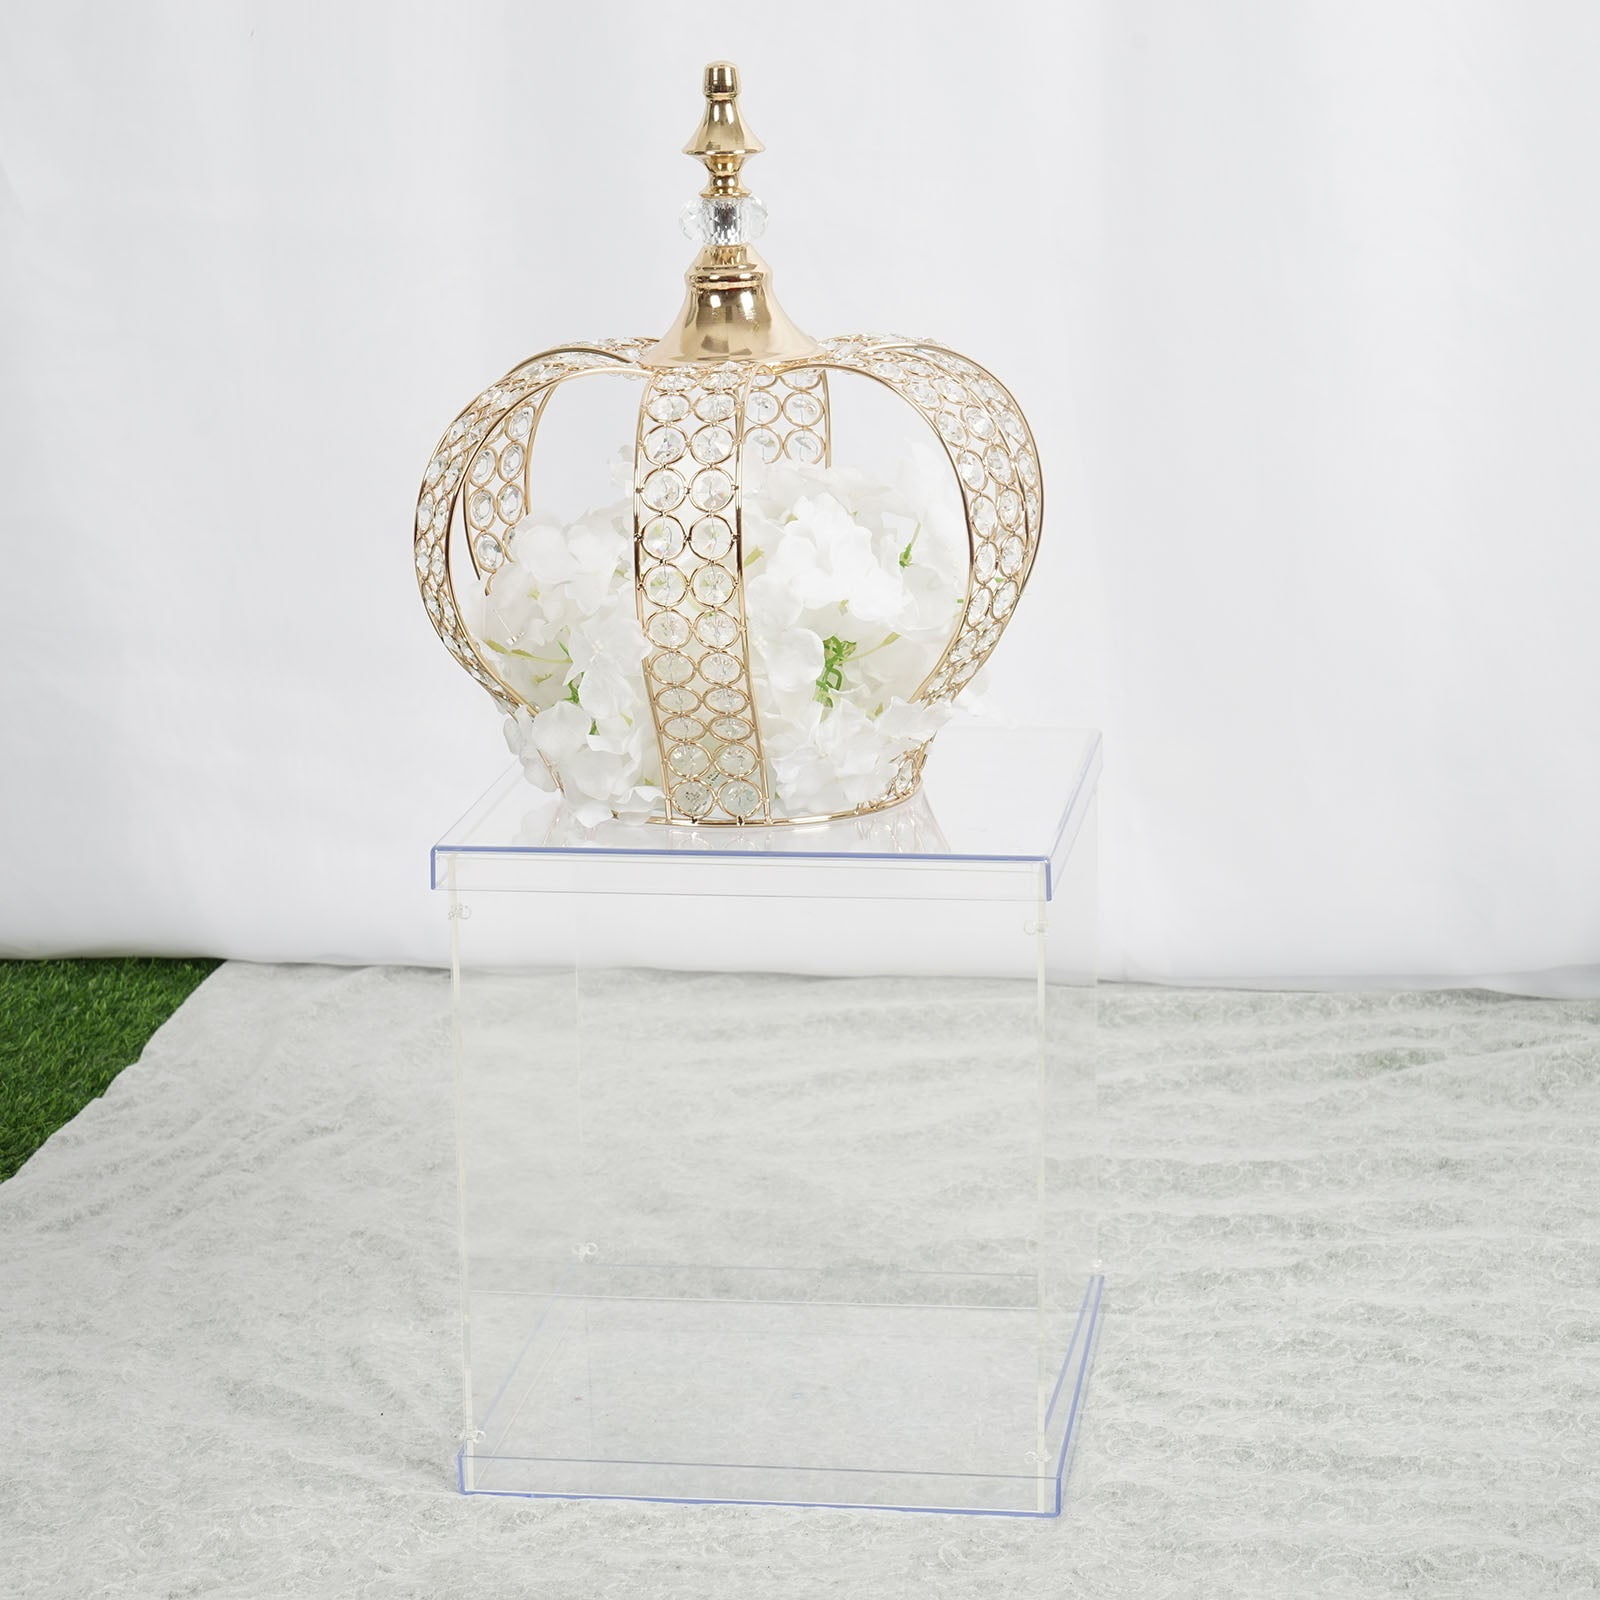 10x5 Clear / Gold Acrylic Hexagonal Cake Box Stand With Hollow Bottom,  Transparent Geometric Pedestal Riser